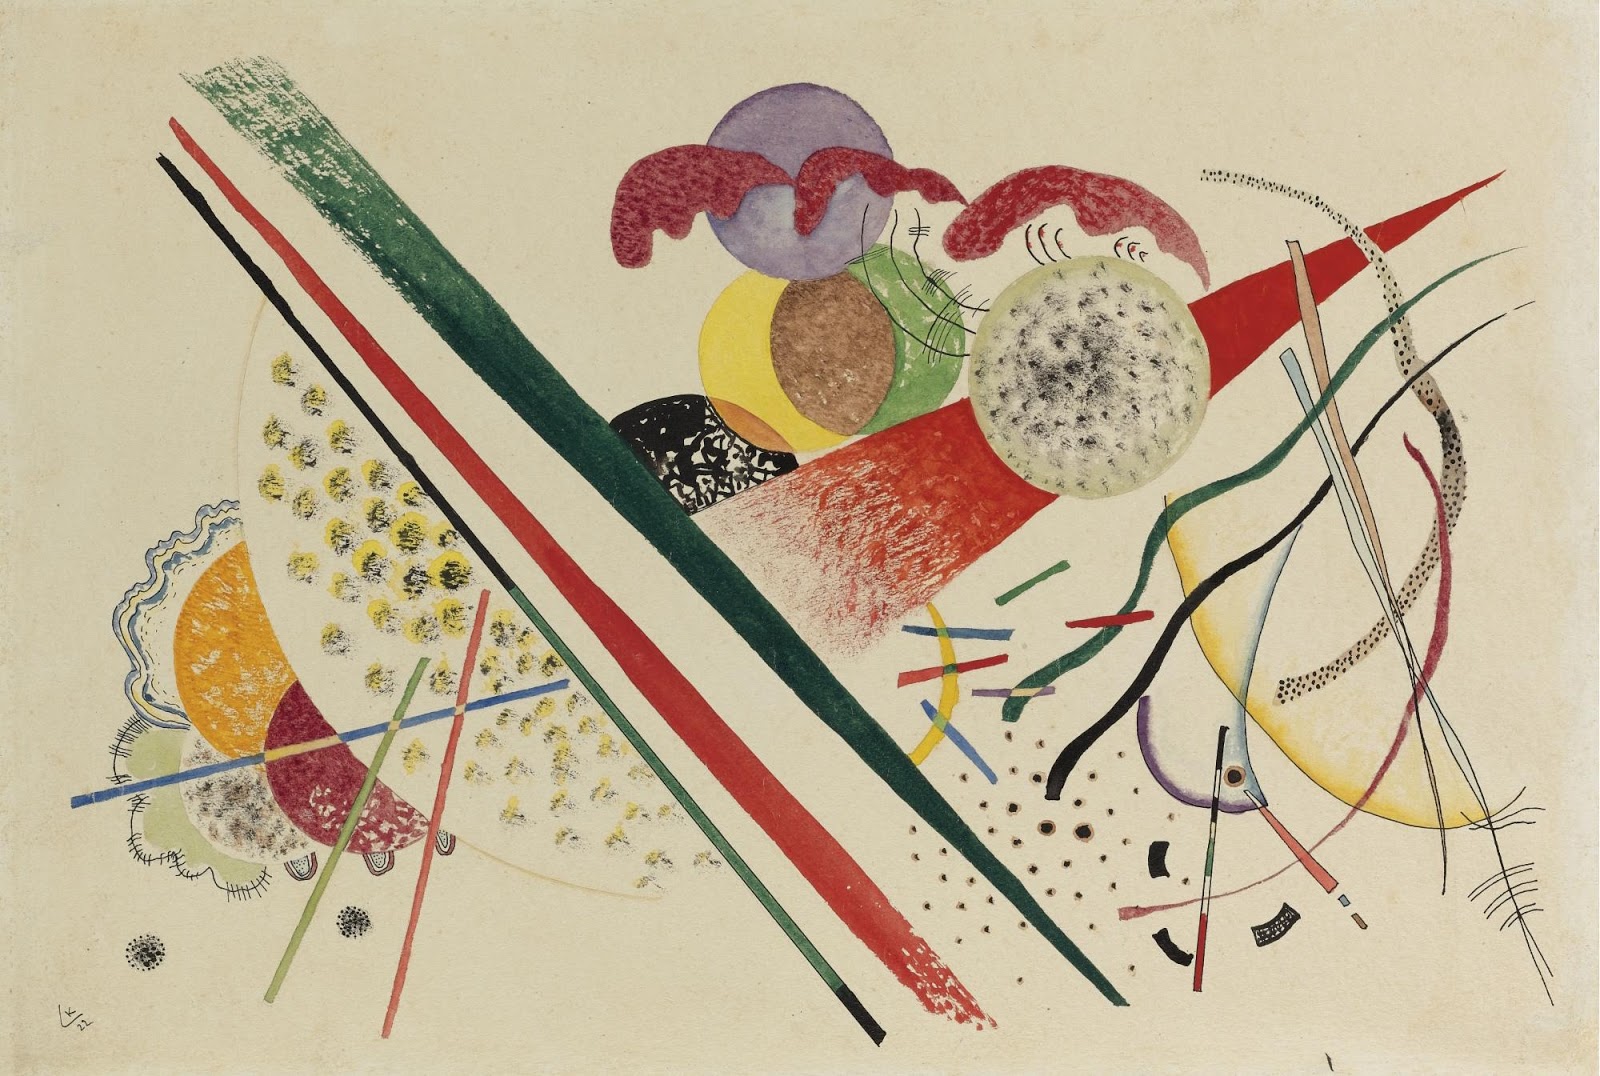 Wassily+Kandinsky-1866-1944 (402).jpg